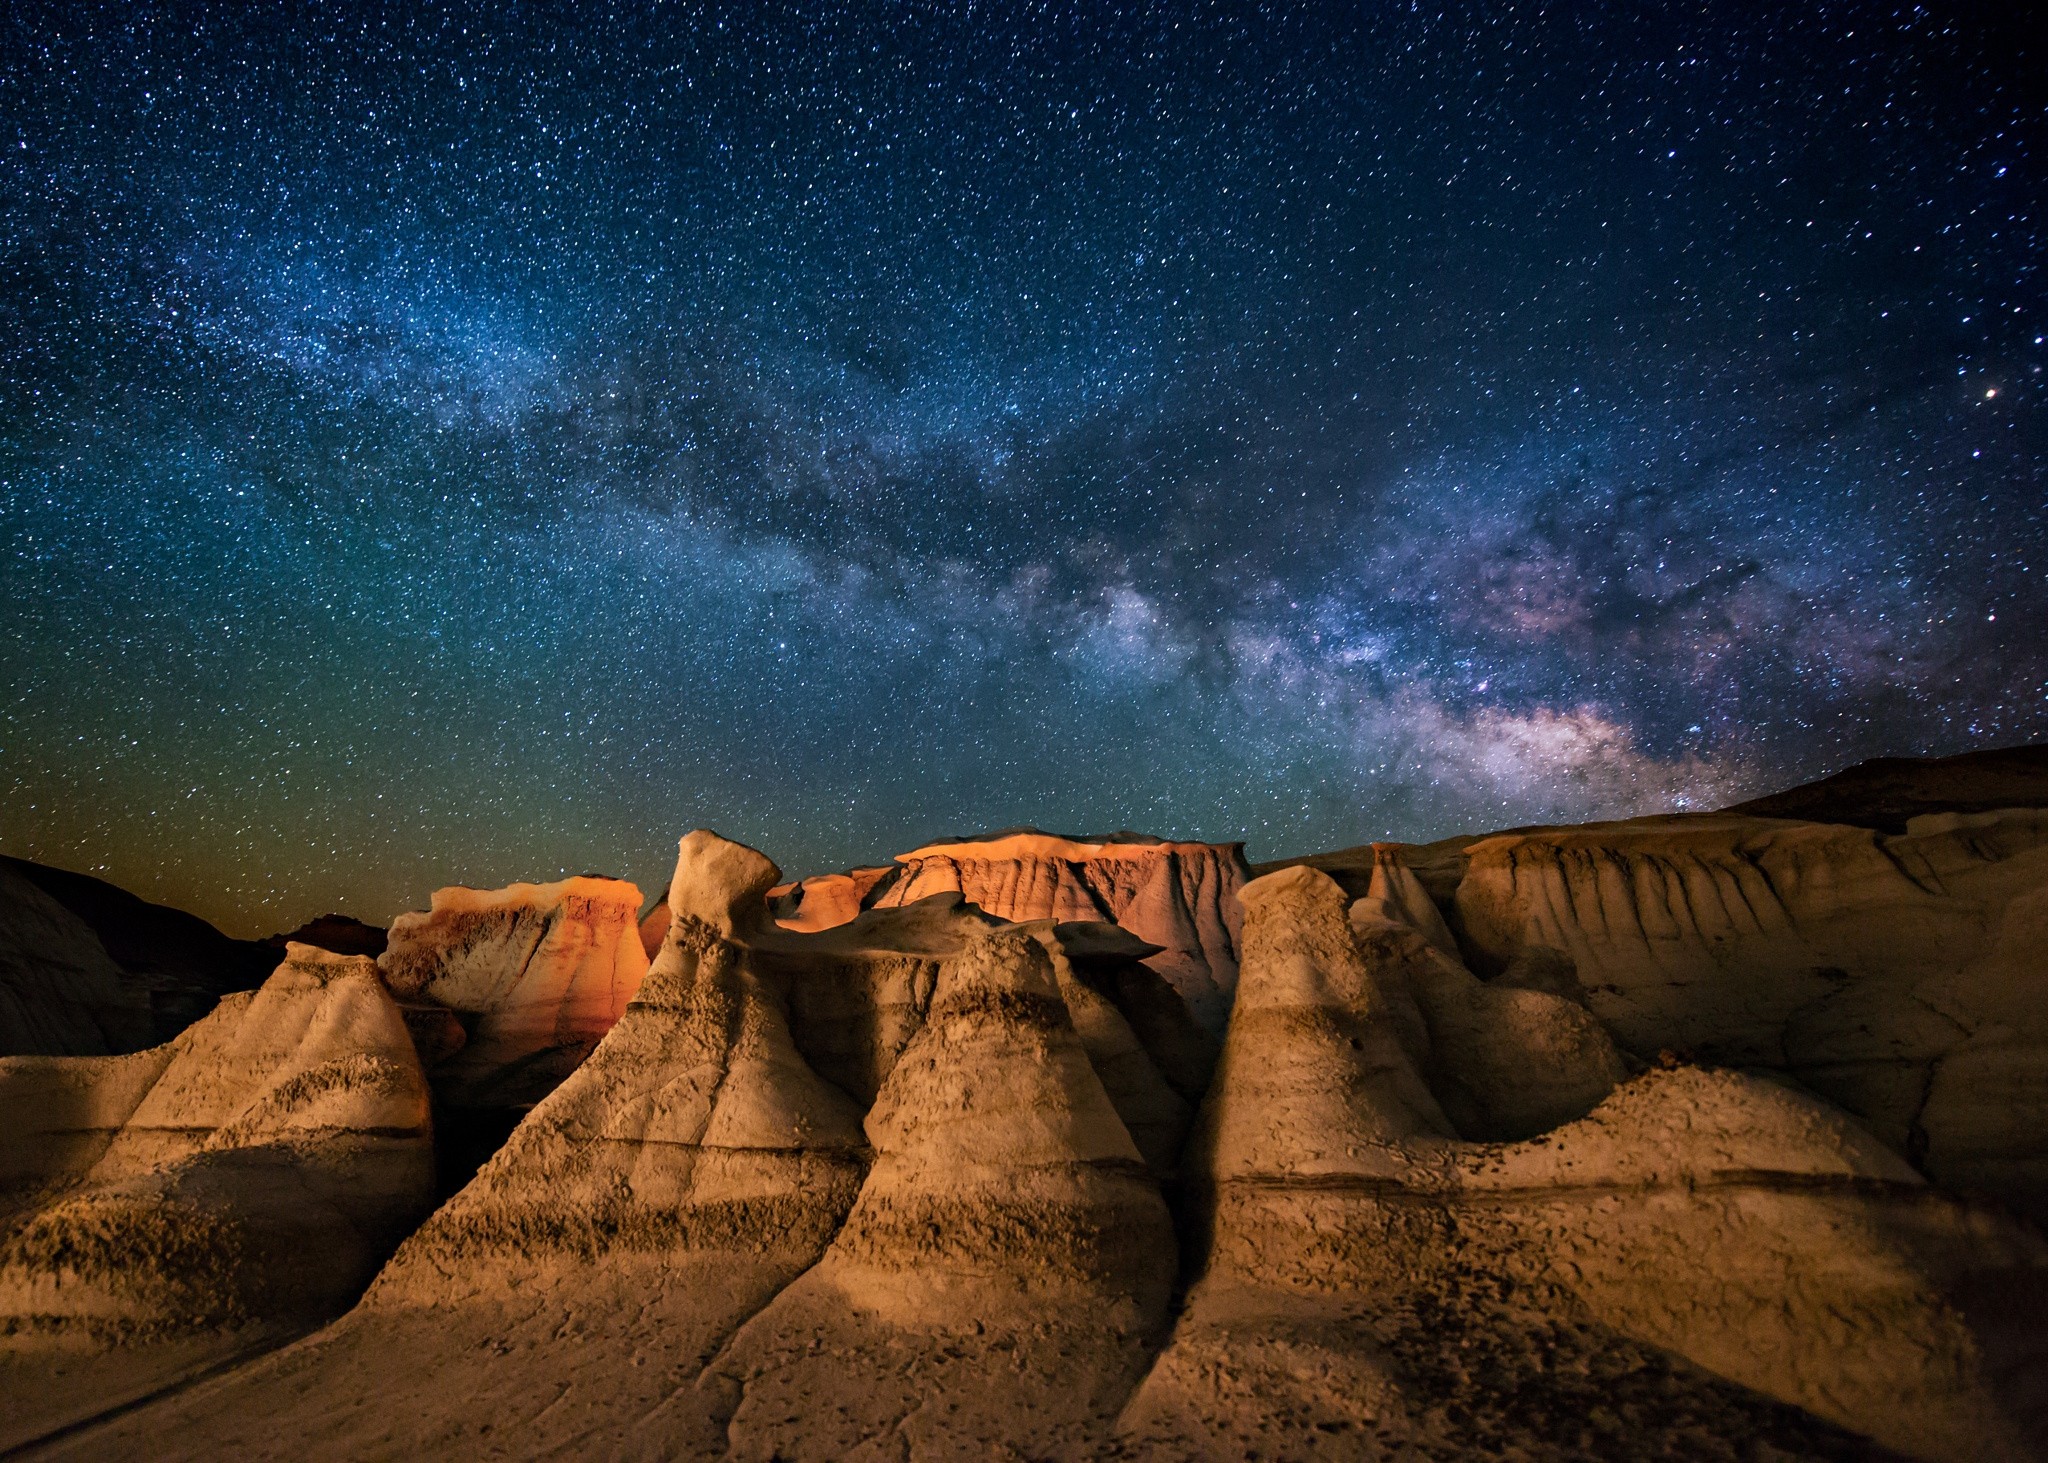 General 2048x1463 landscape nature Milky Way galaxy starry night desert moonlight long exposure New Mexico sky stars